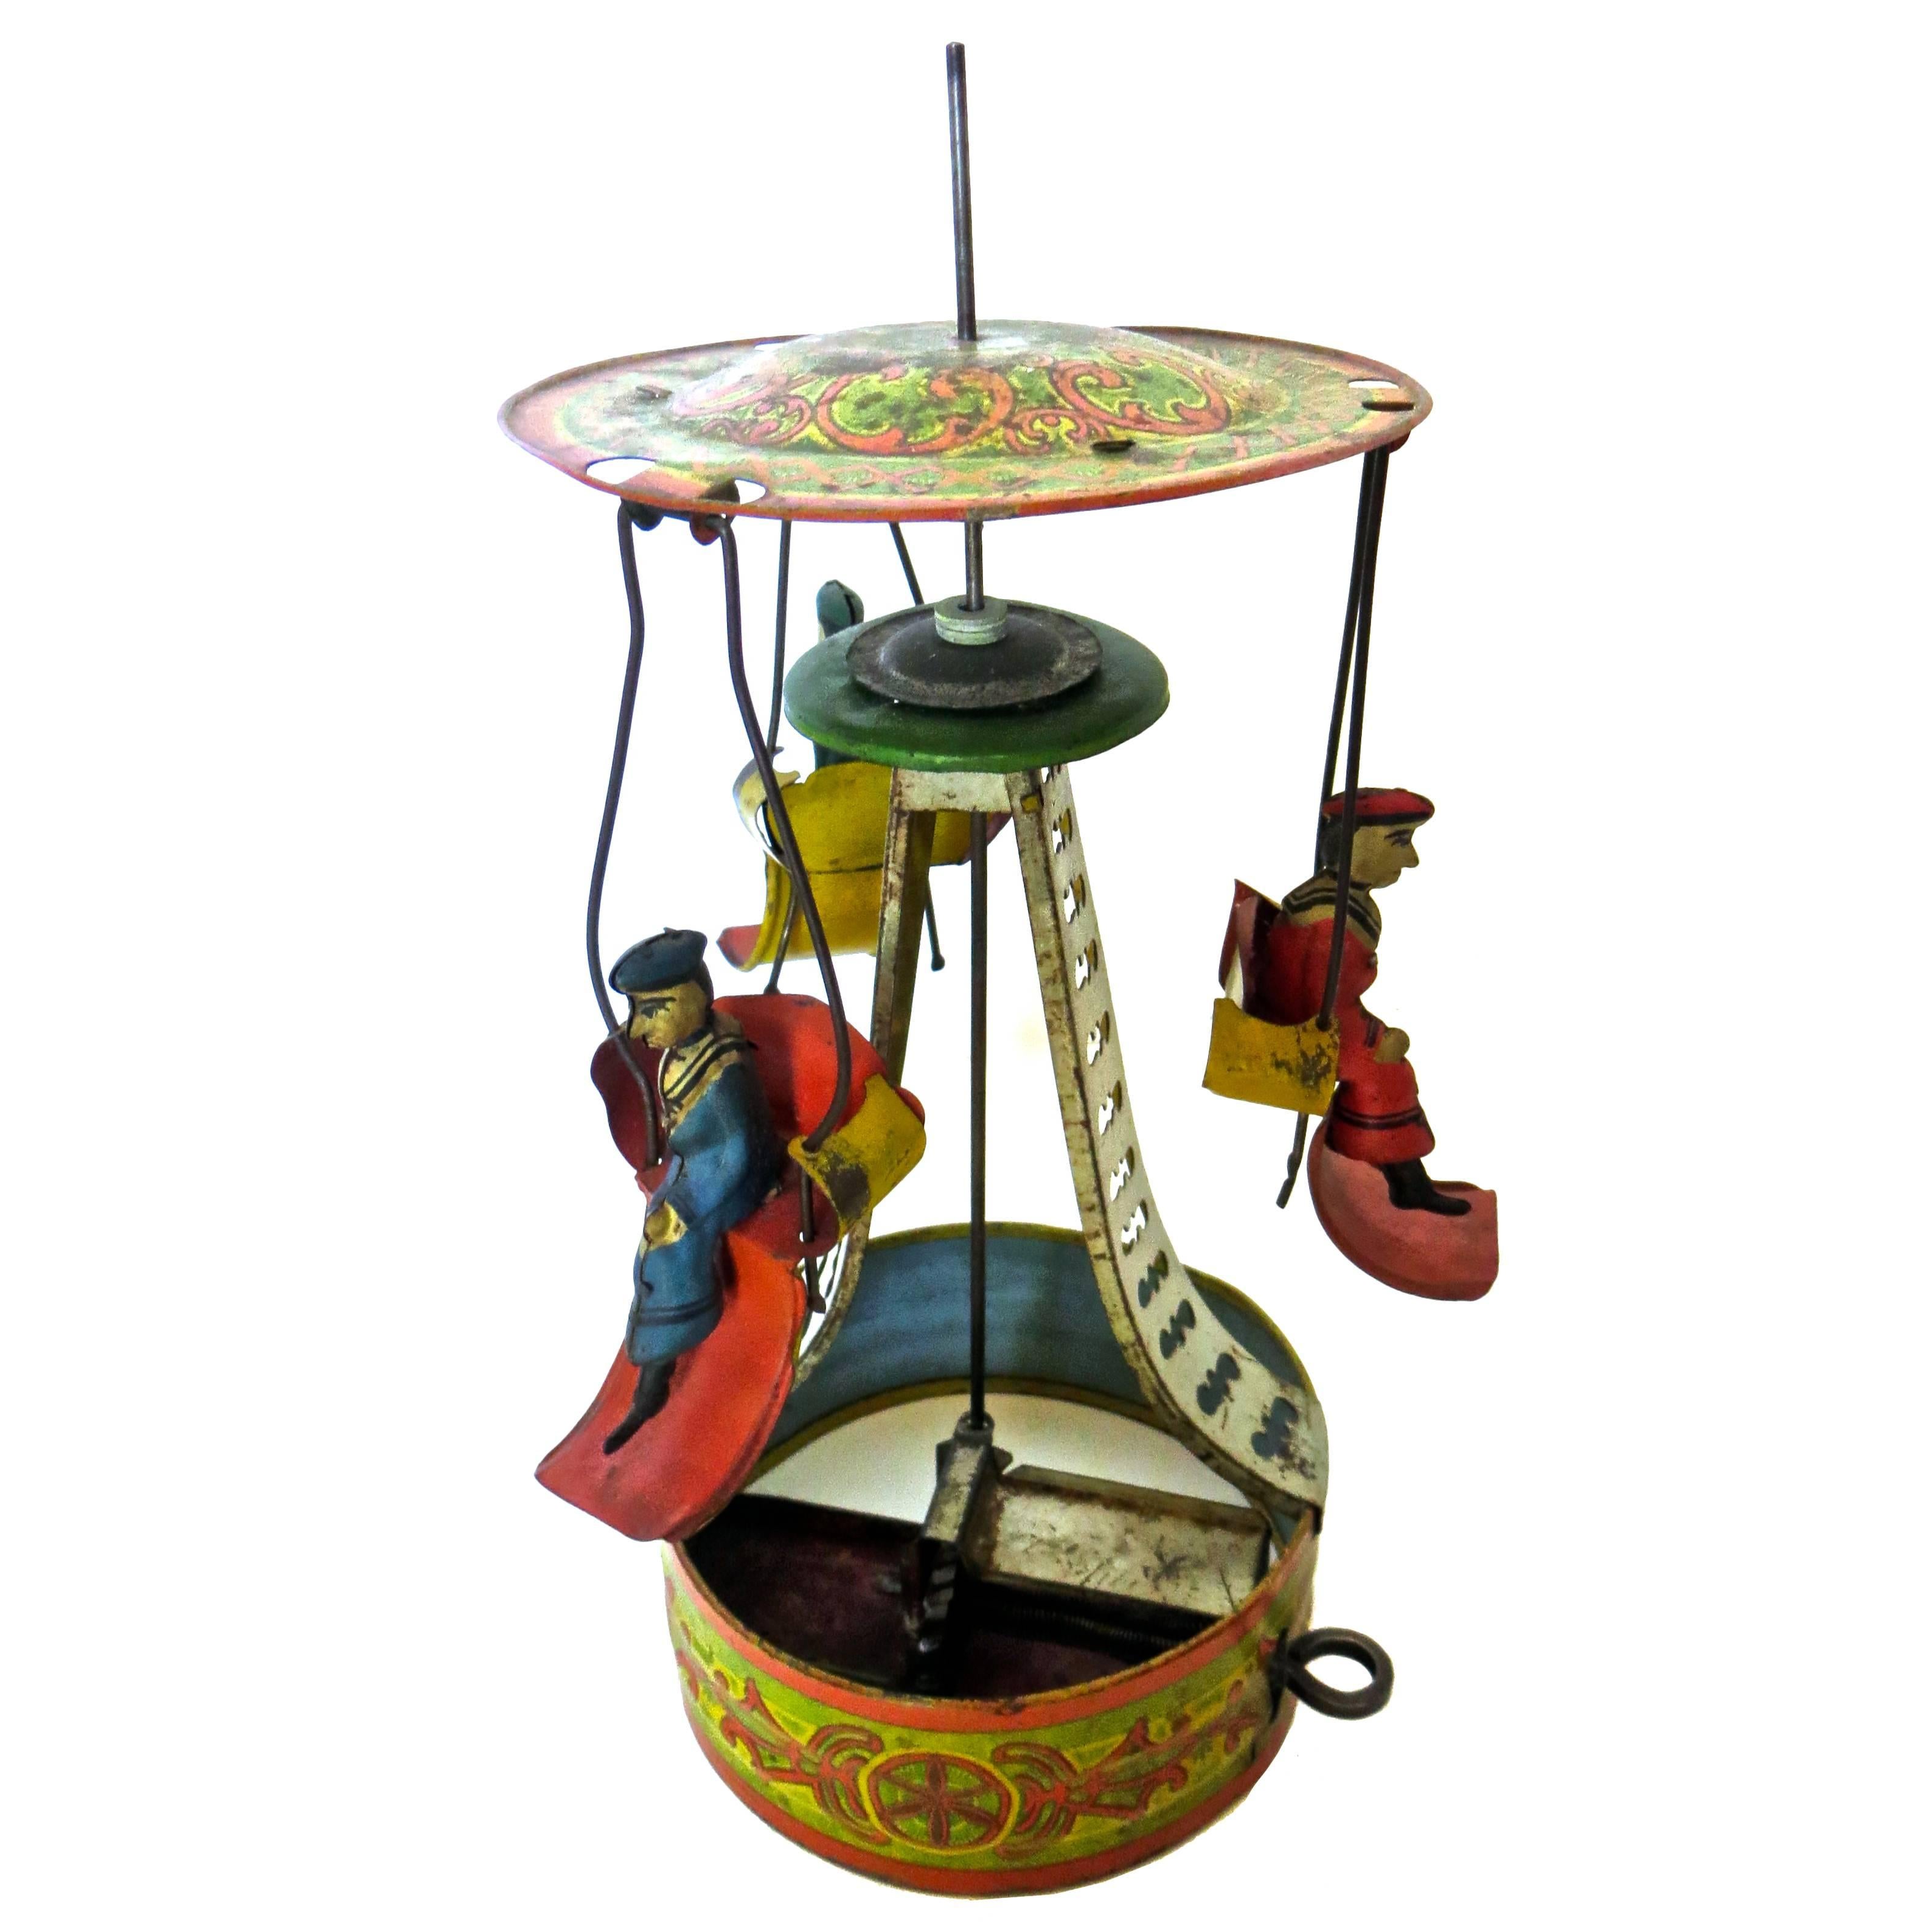 American Tin Toy, Clockwork Carousel, circa 1895